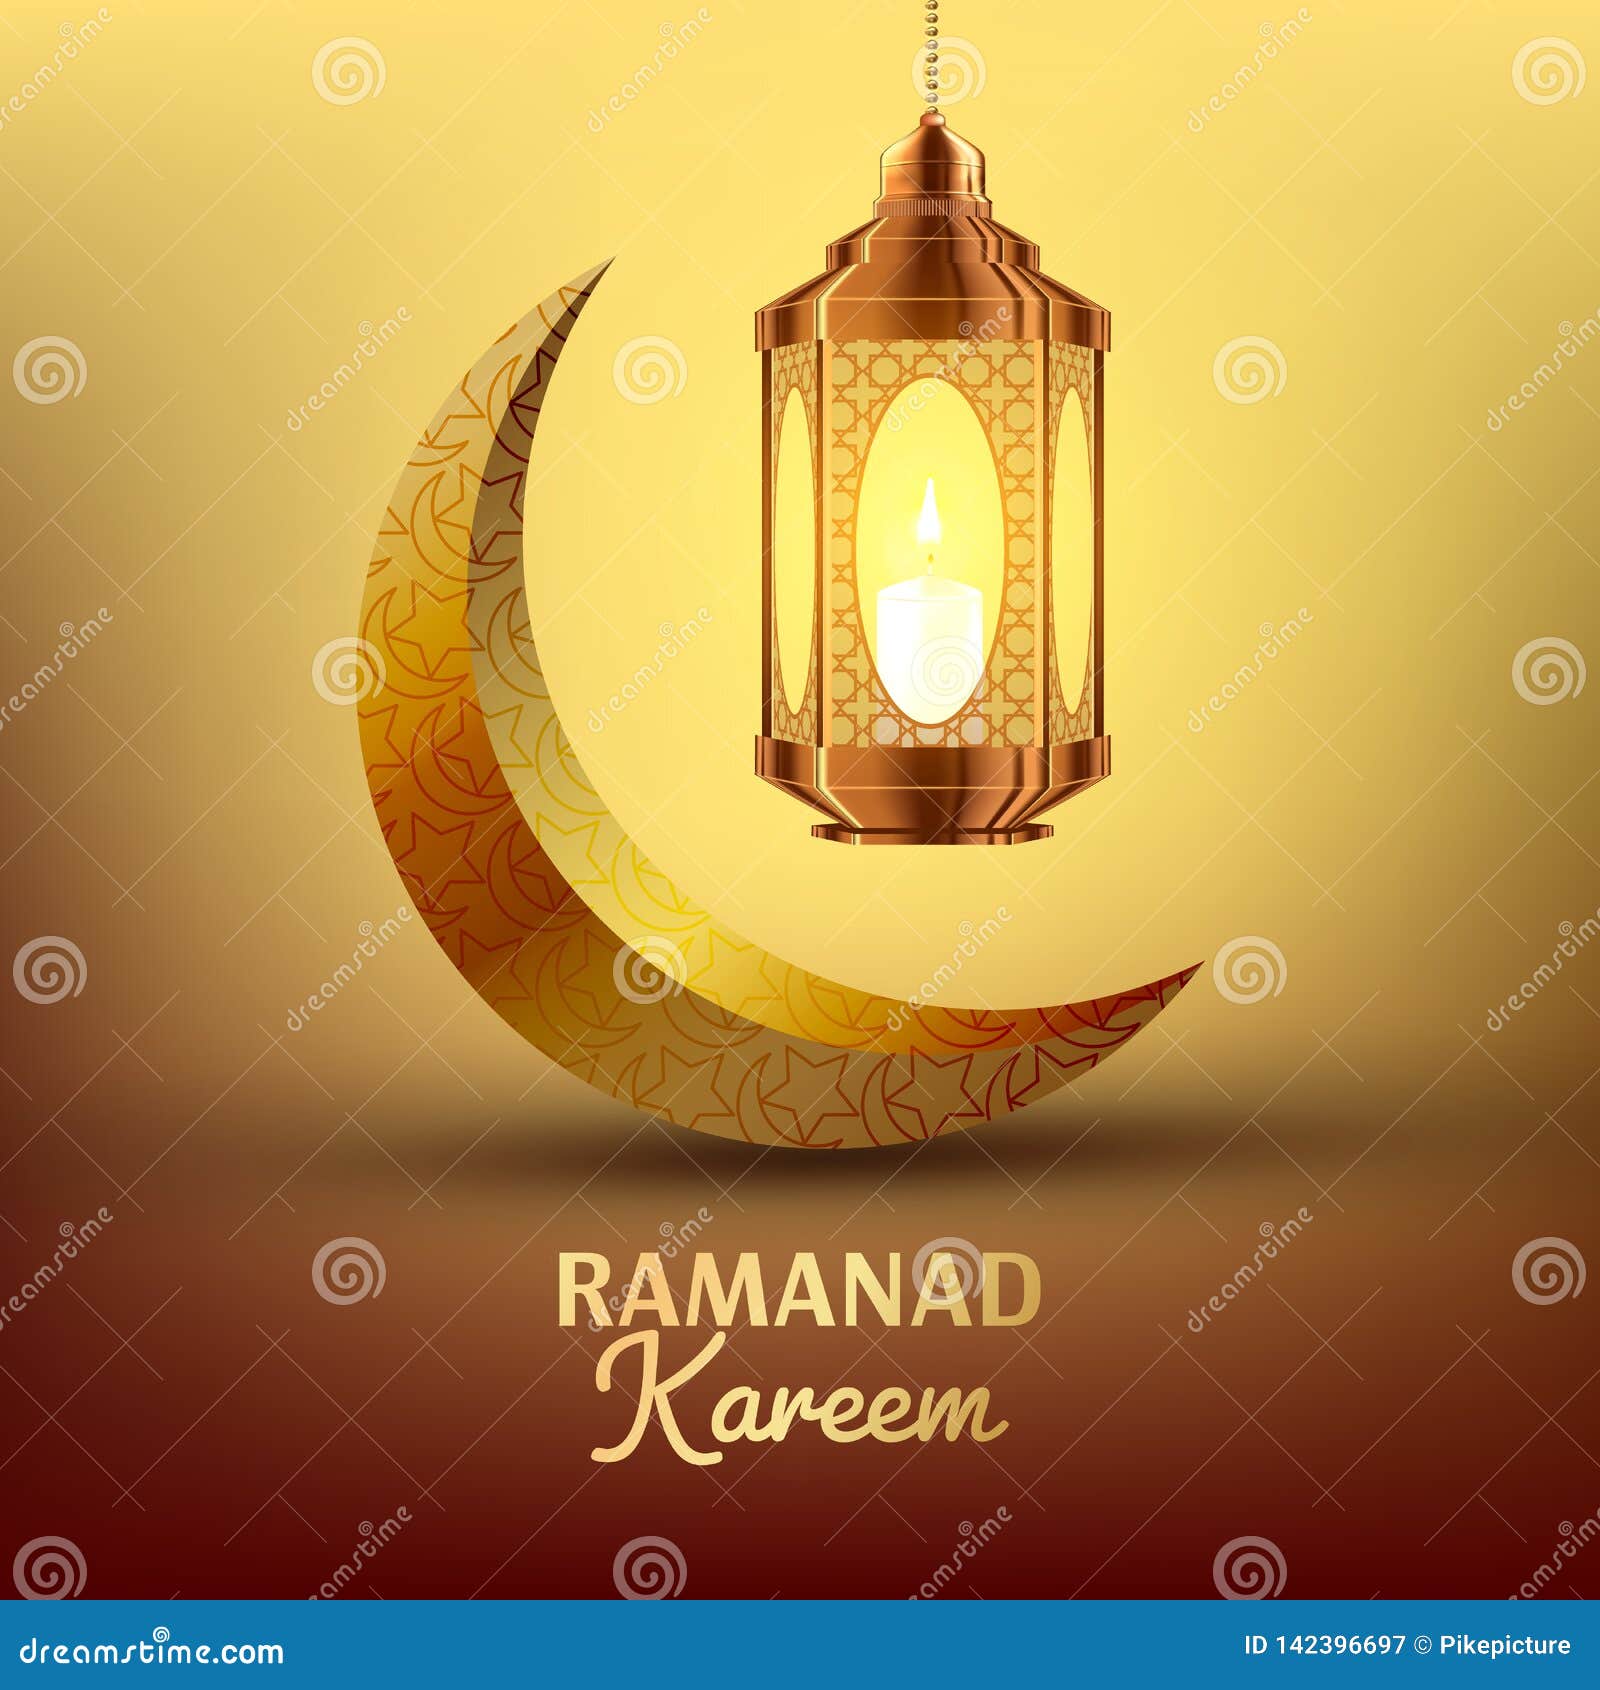 Ramadan Lampe Set Vektor. Islam. Kareem Lampe. Laterne Design